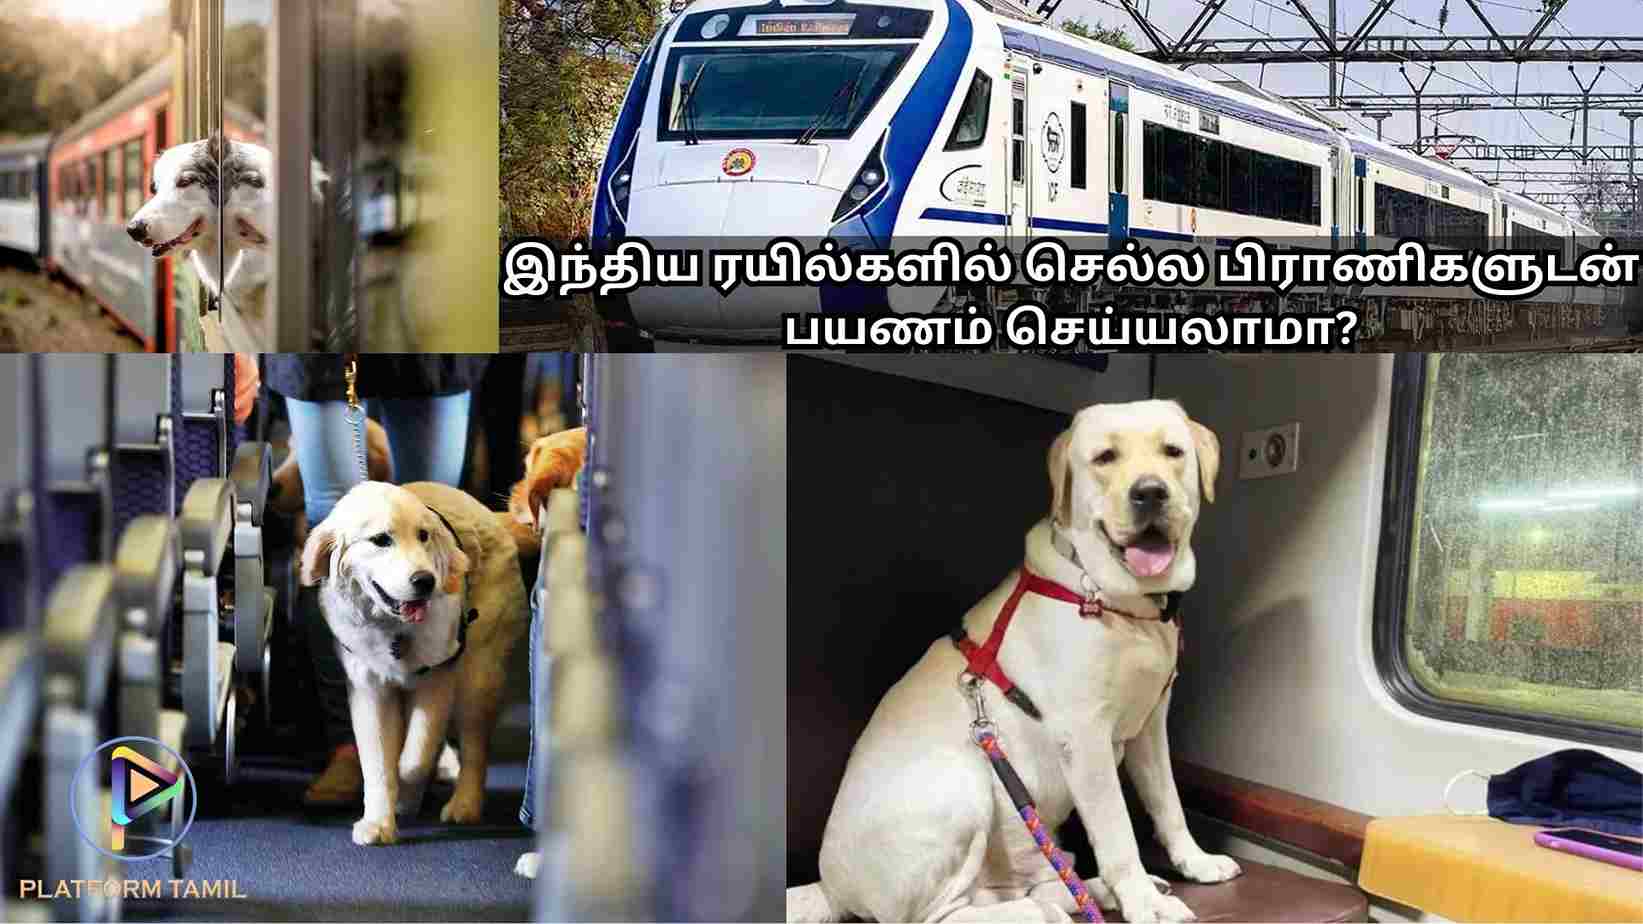 Pet Dogs in Trains - Platform Tamil